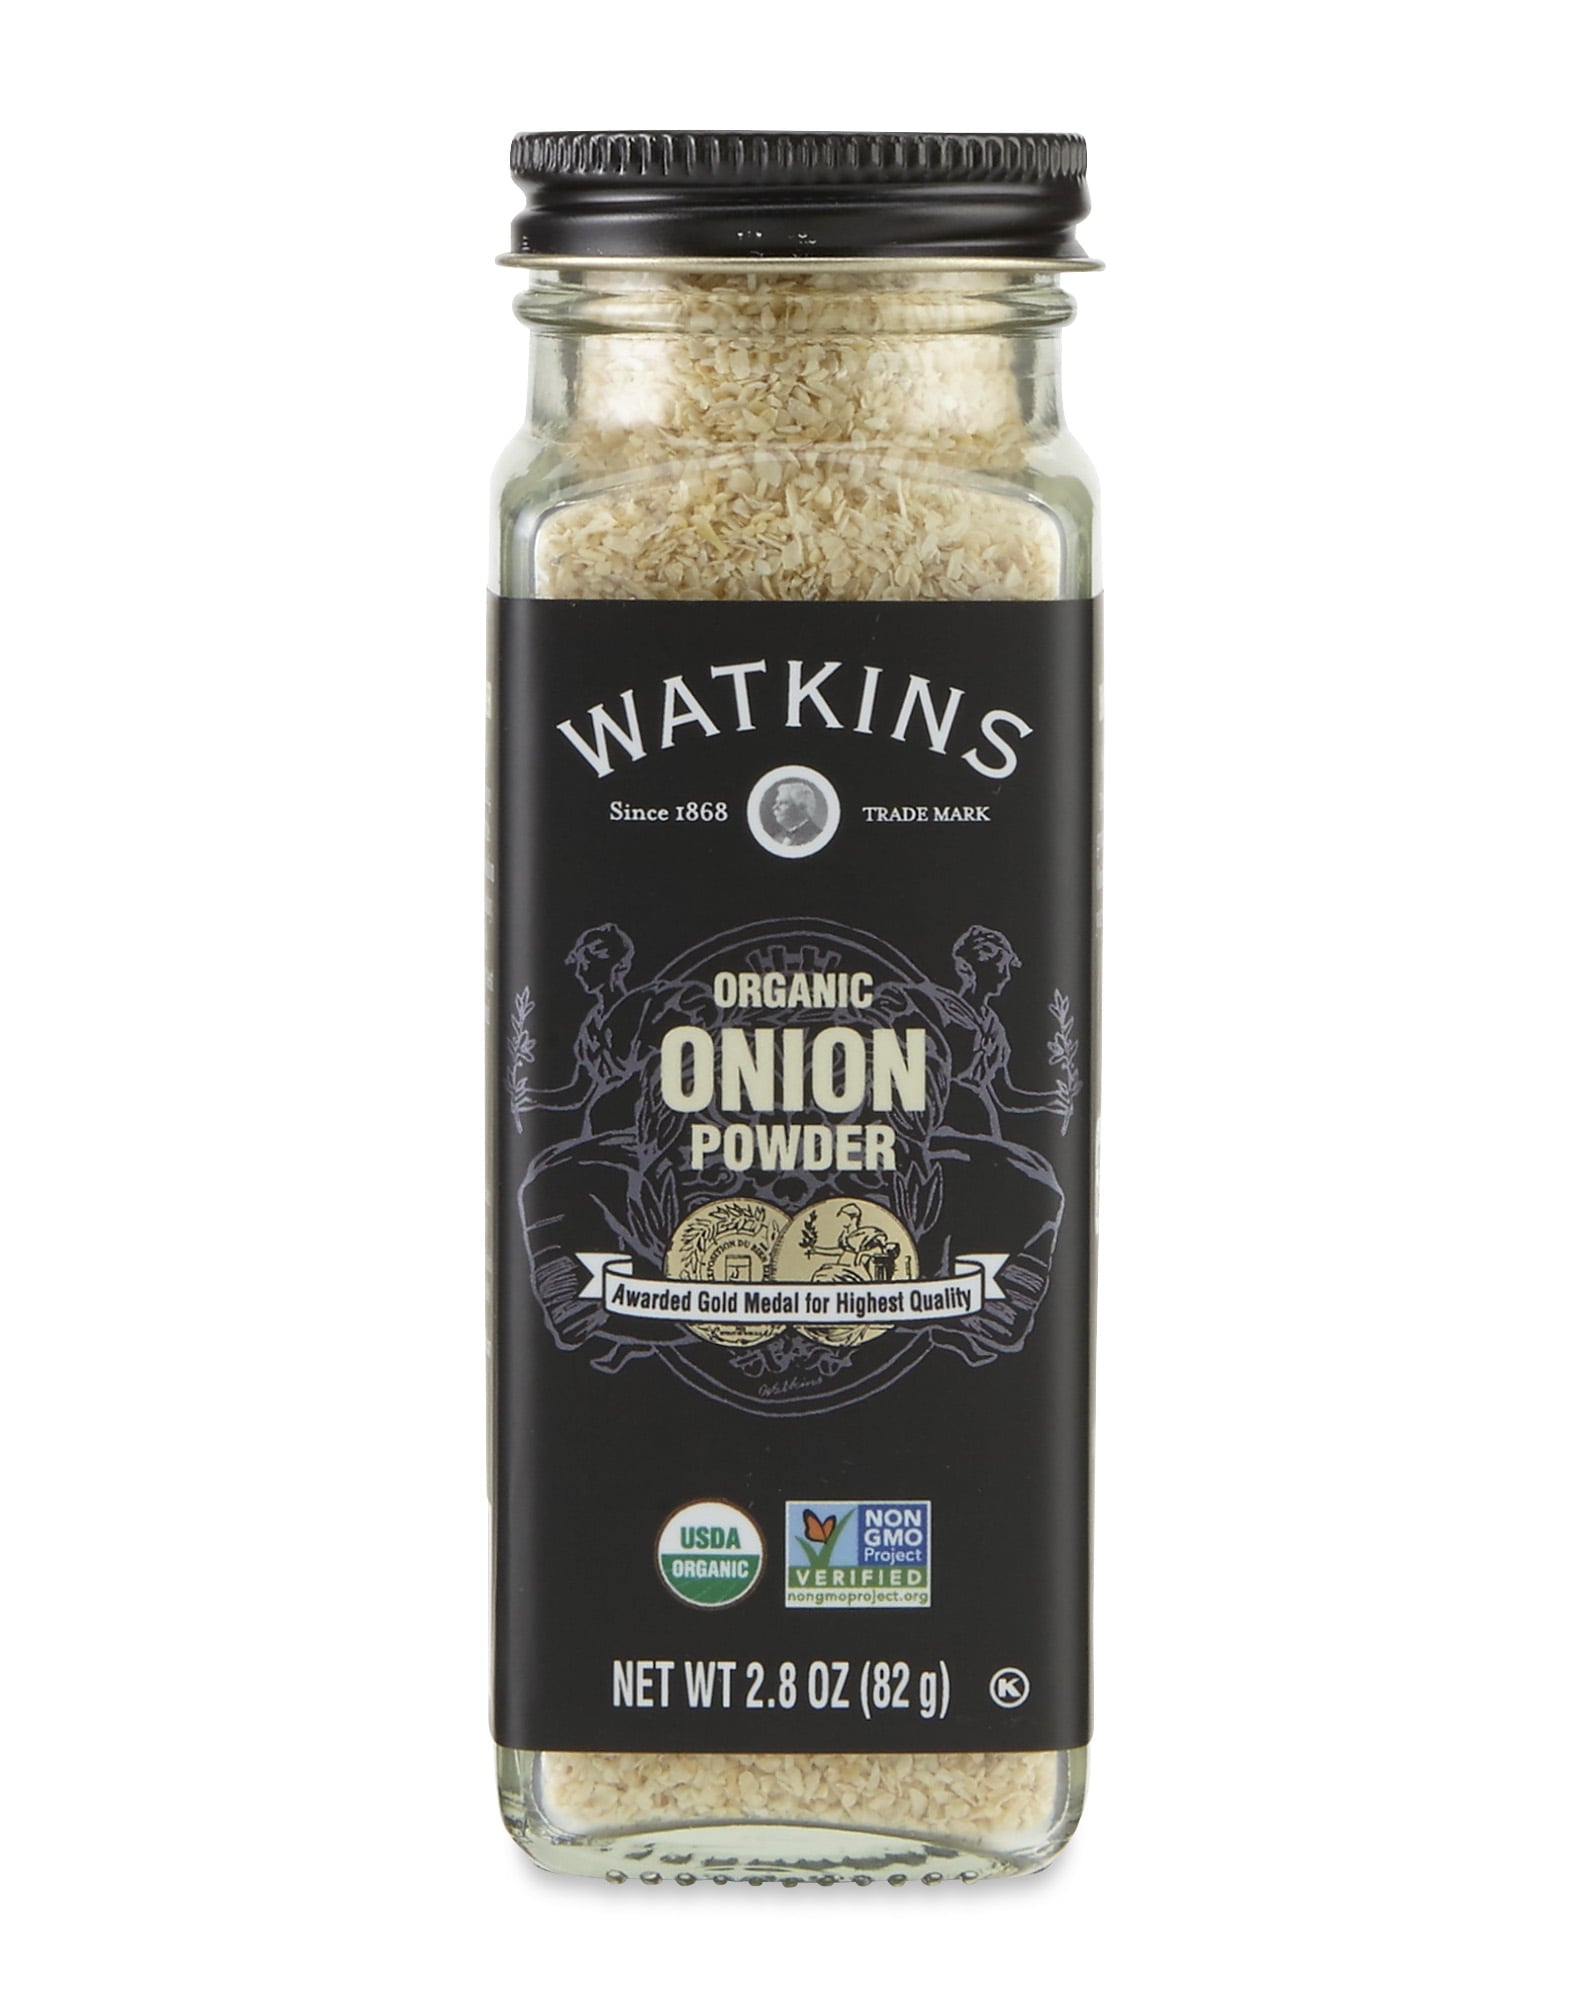 Watkins Onion Powder 2.8 oz Bag